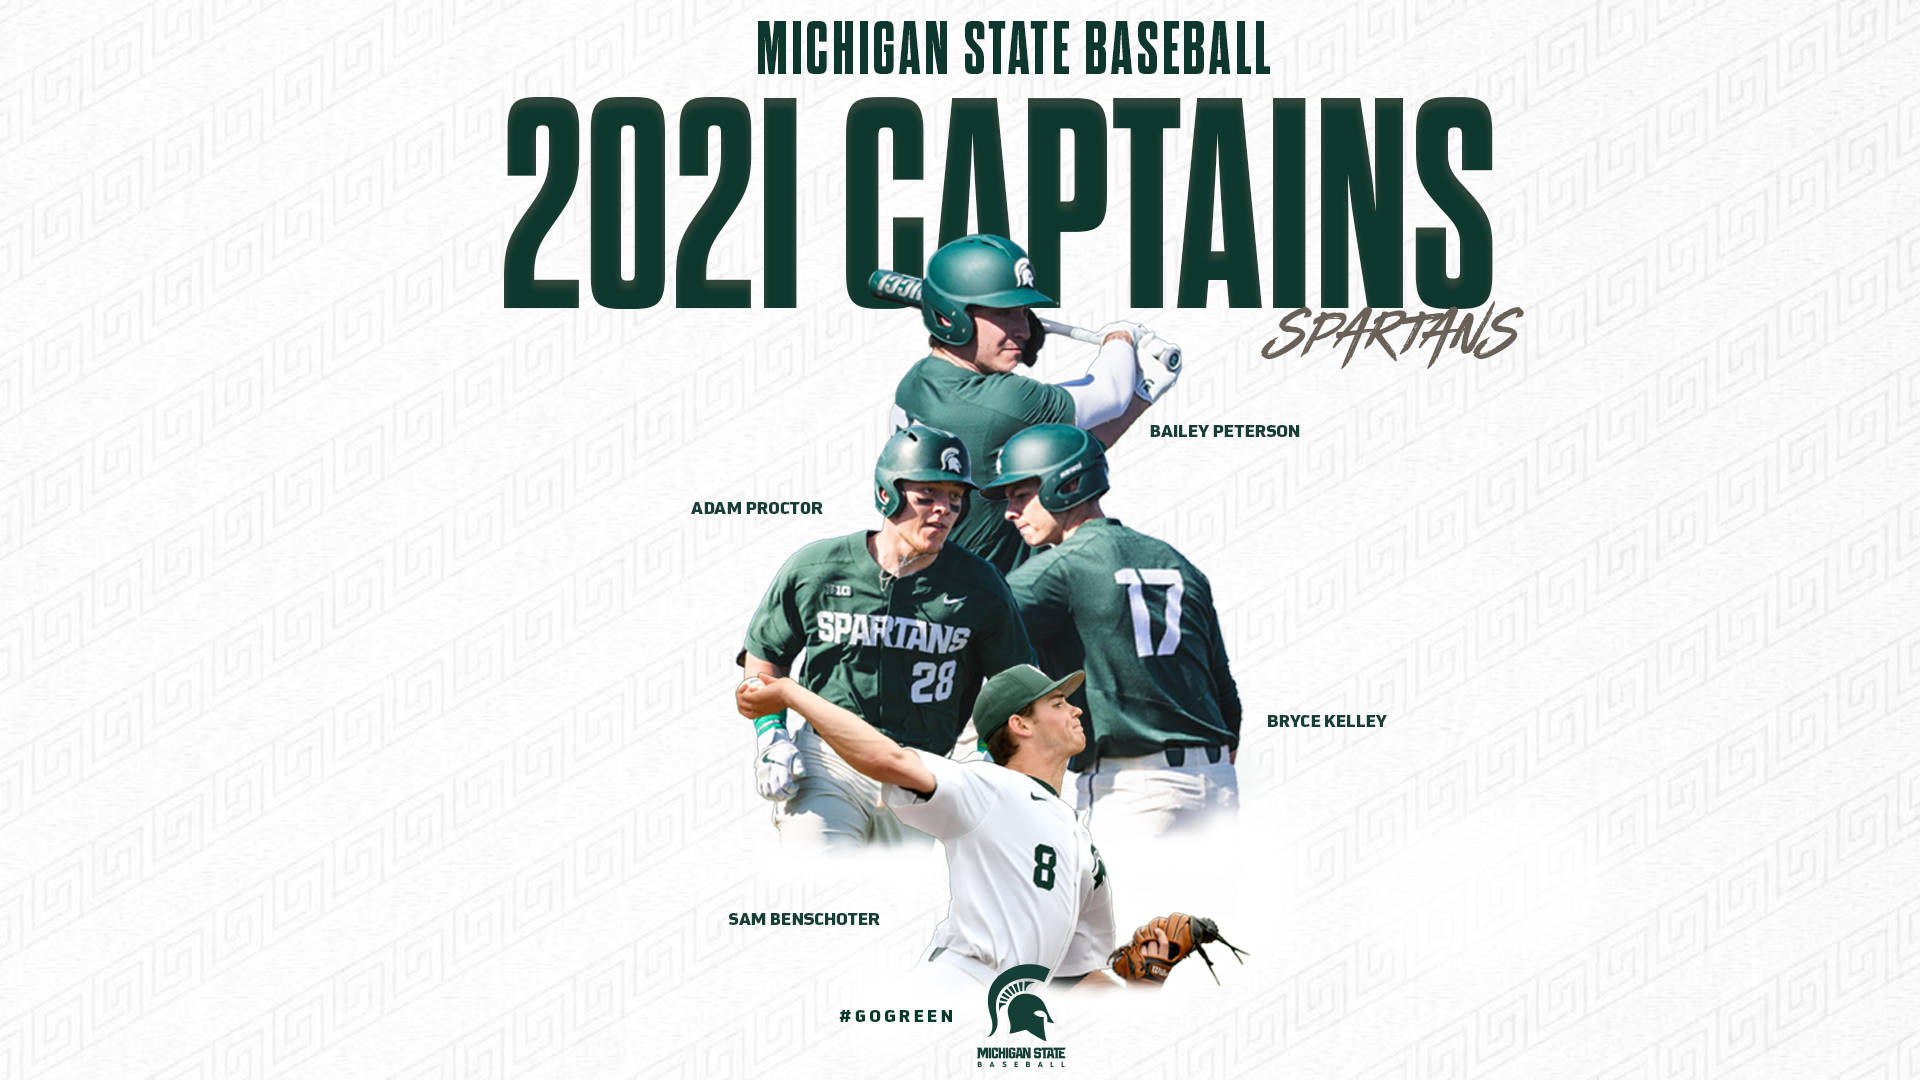 Michigan State University 2021 Captains